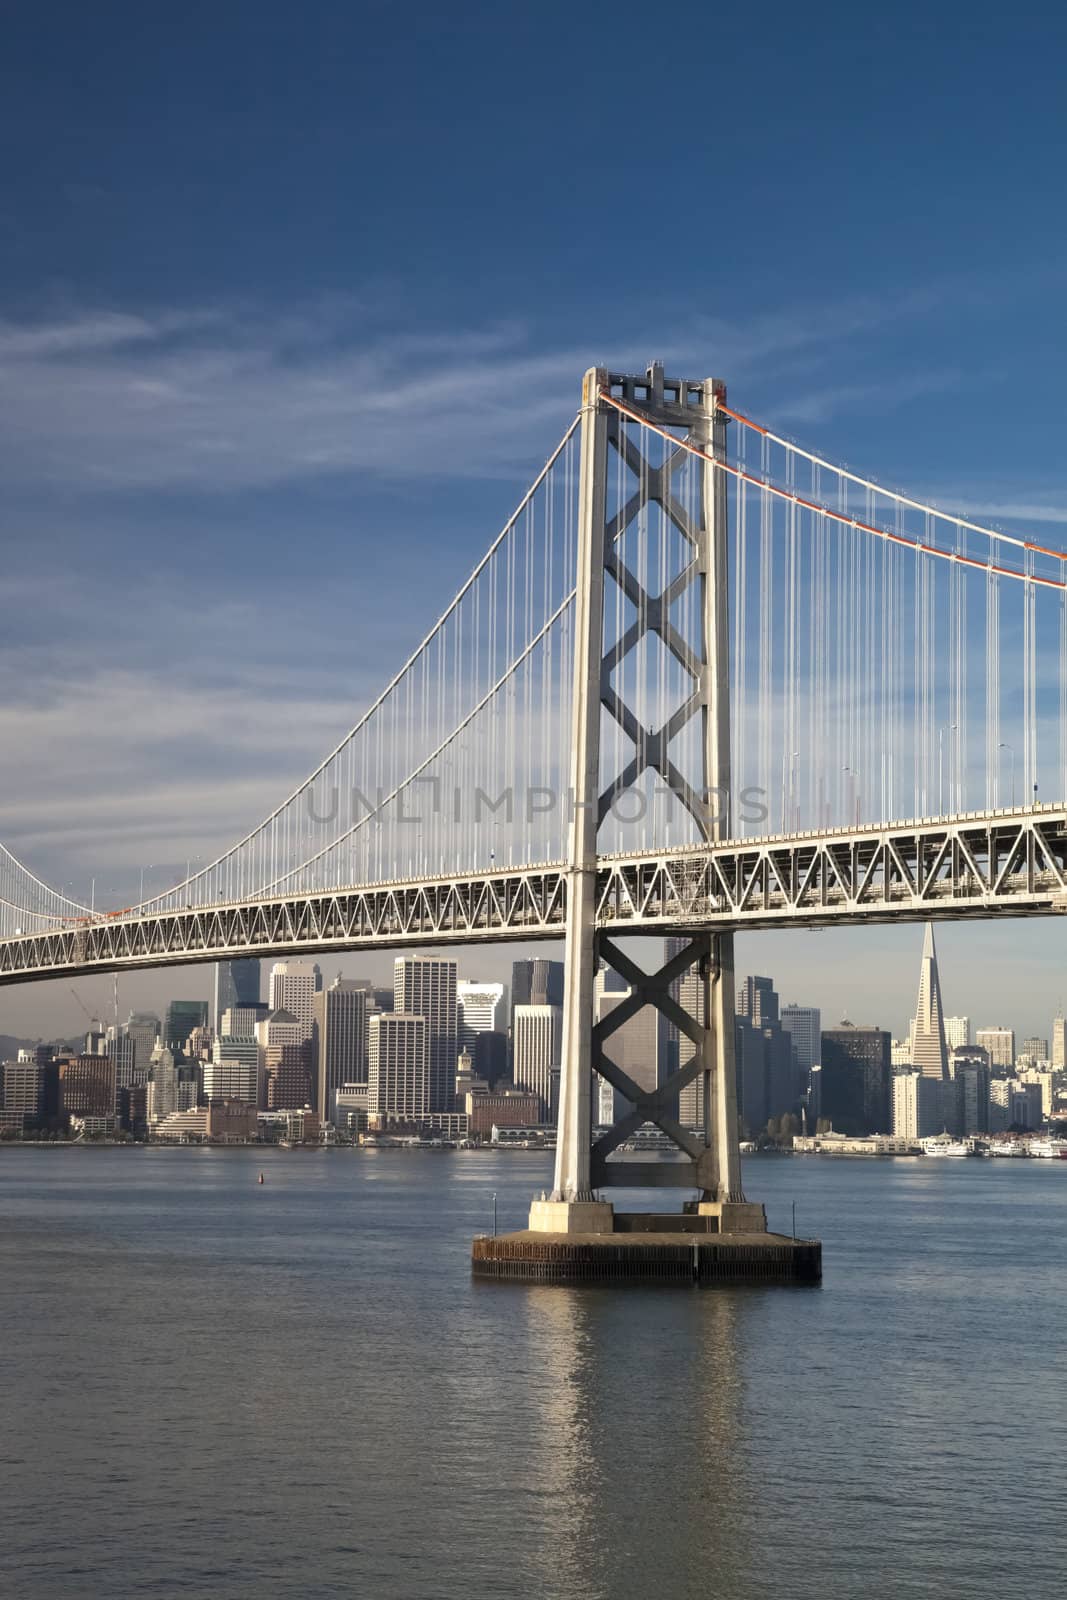 SAN FRANCISCO - NOVEMBER 2012: The Bay Bridge by hanusst